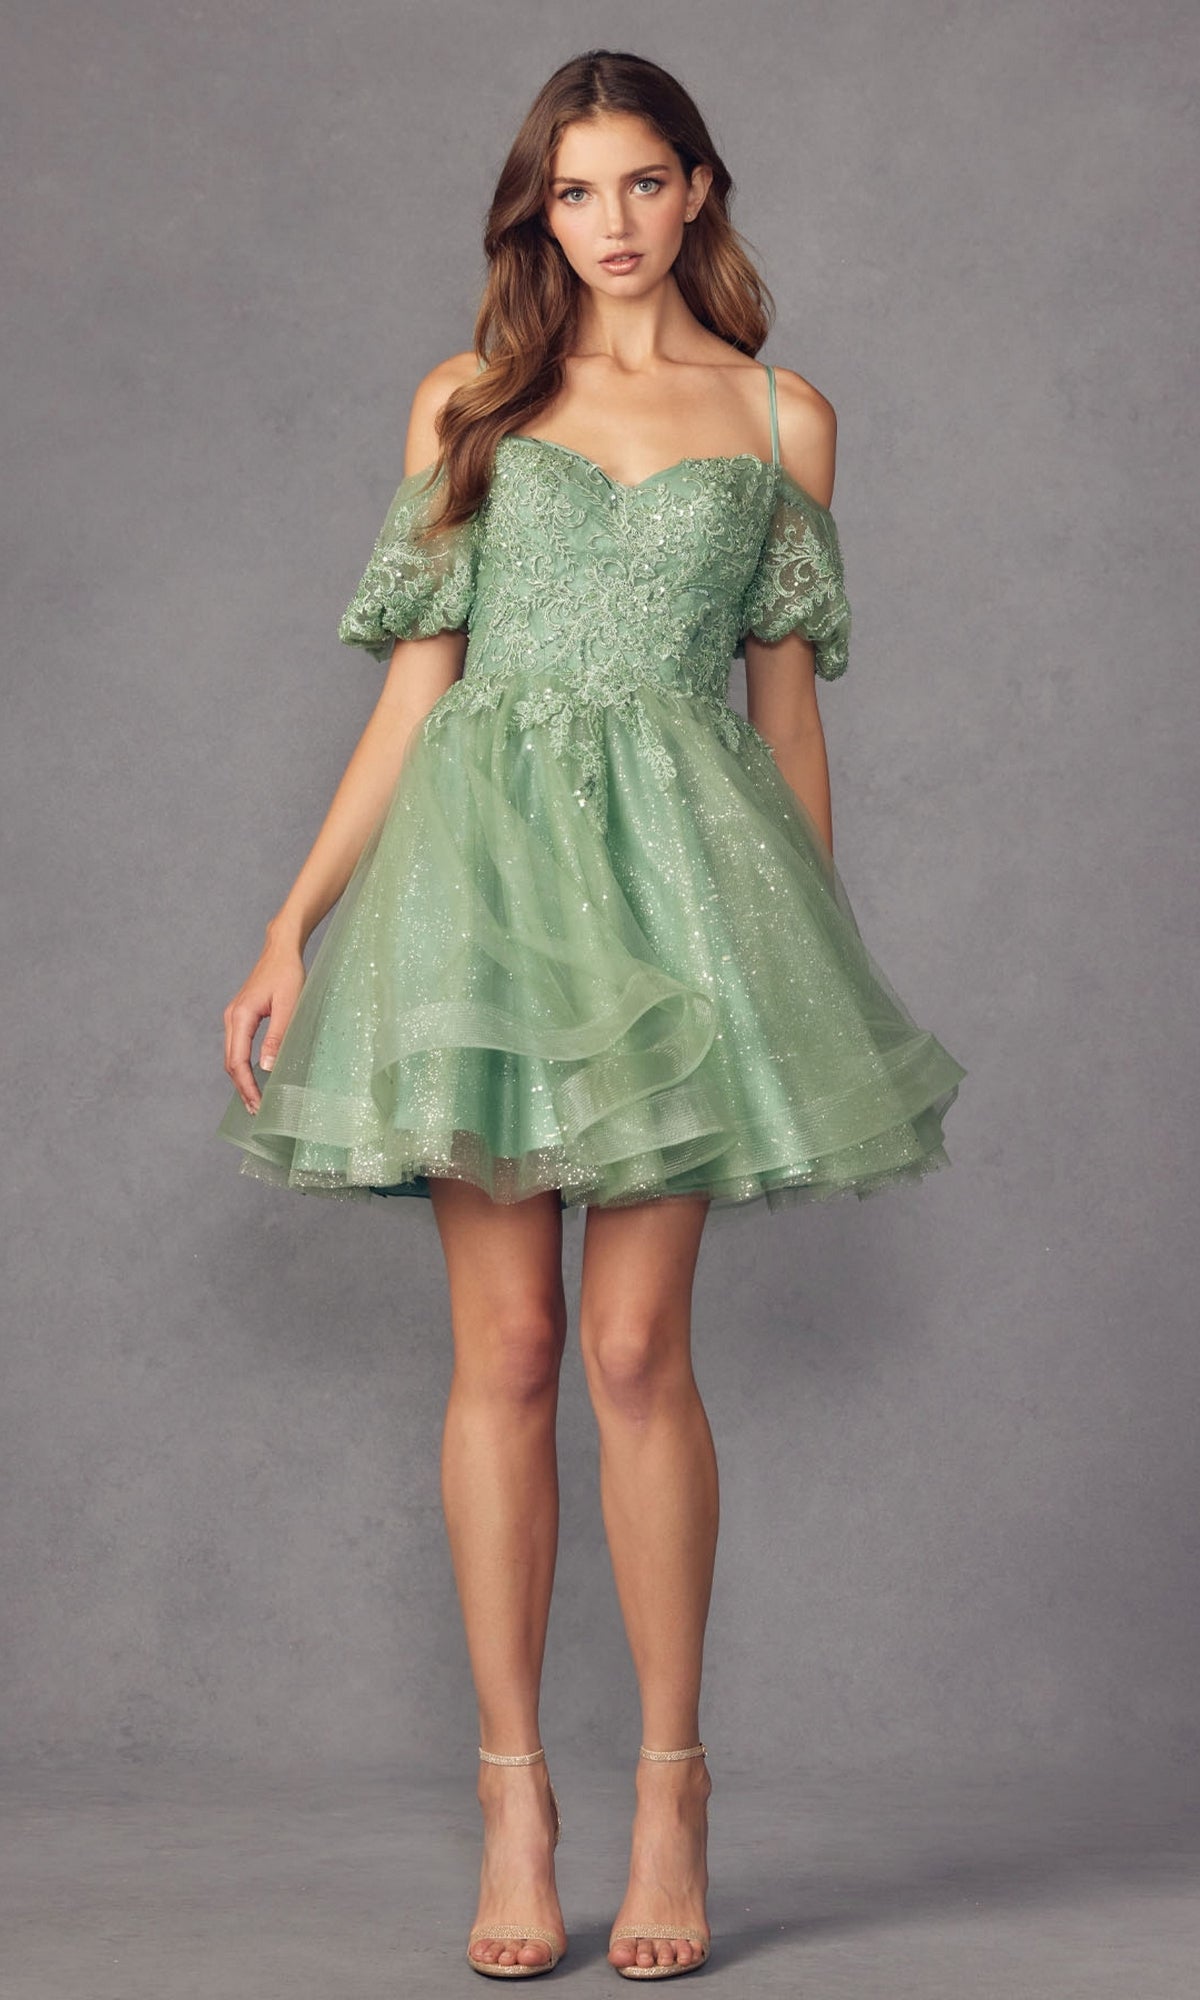 Shimmer Satin Short Prom Dress with Pockets - PromGirl